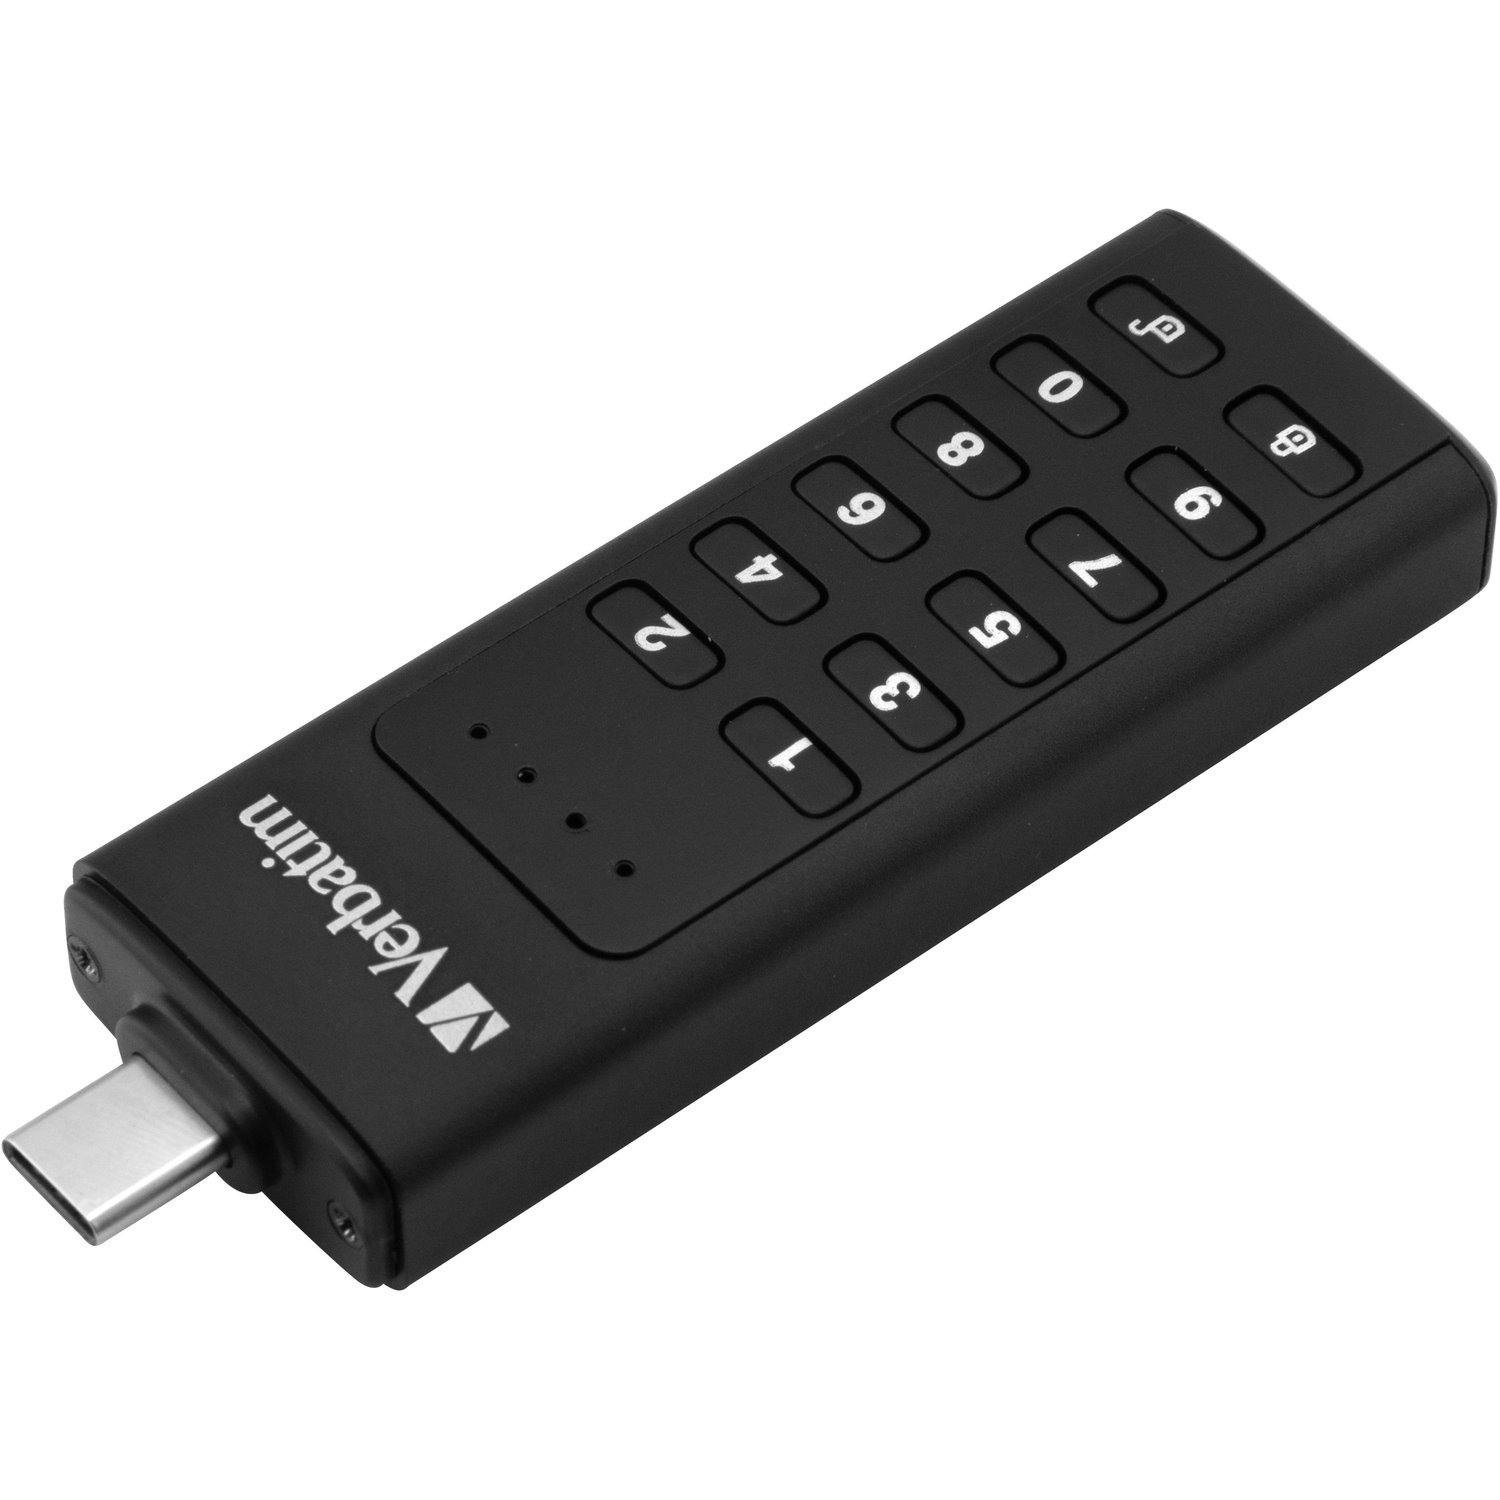 Verbatim Keypad Secure 32 GB USB 3.1 Type C Flash Drive - Black - 256-bit AES